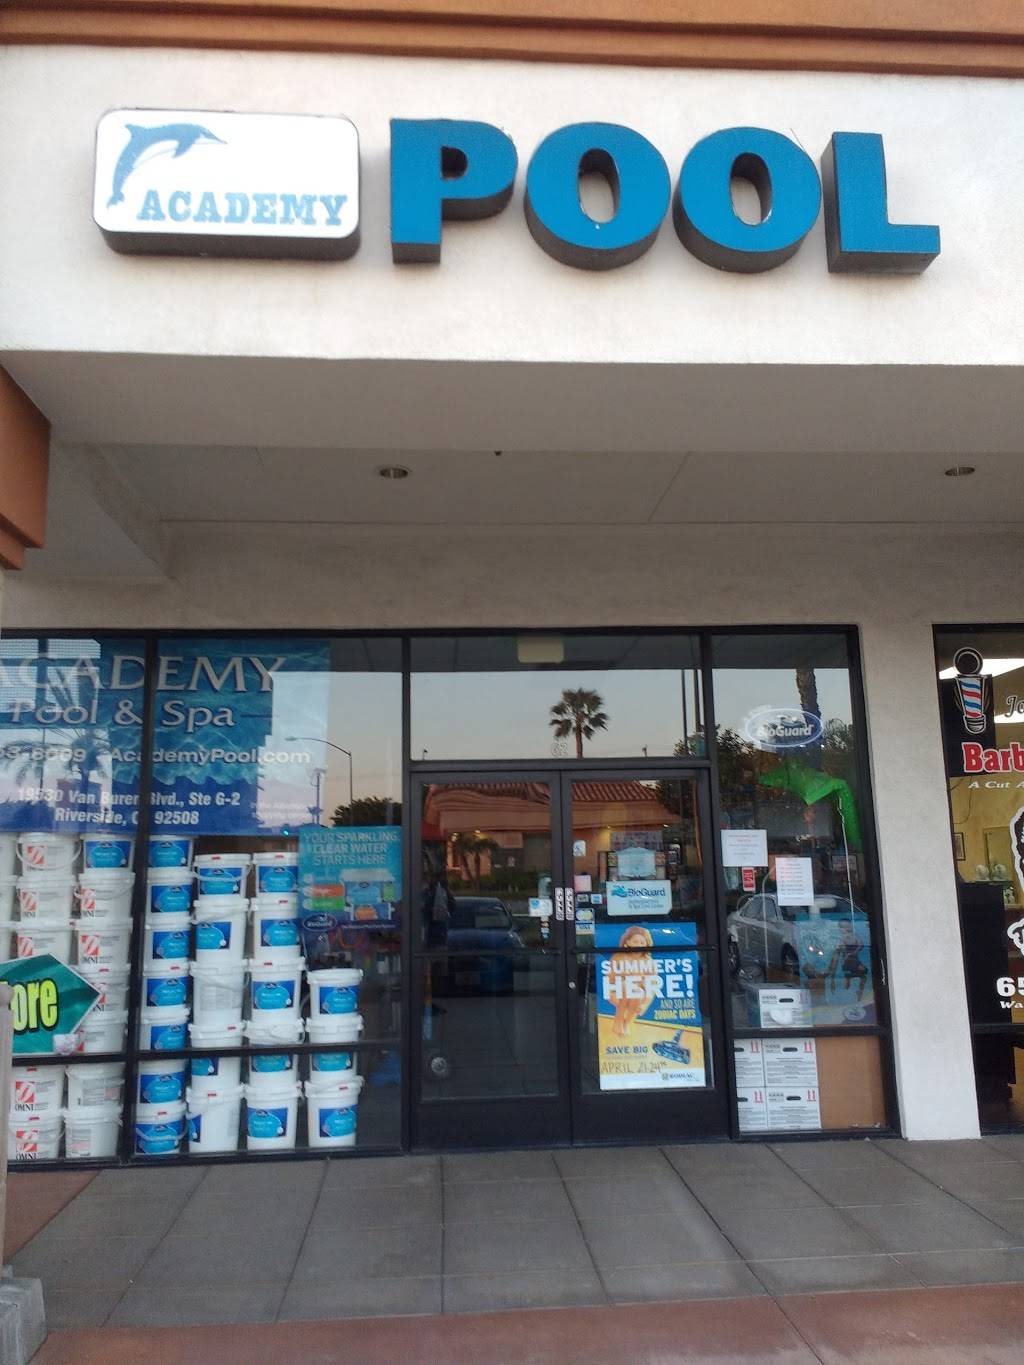 Academy Pool and Spa Supplies Inc. | 19530 Van Buren Boulevard g2, Riverside, CA 92508 | Phone: (951) 653-8009